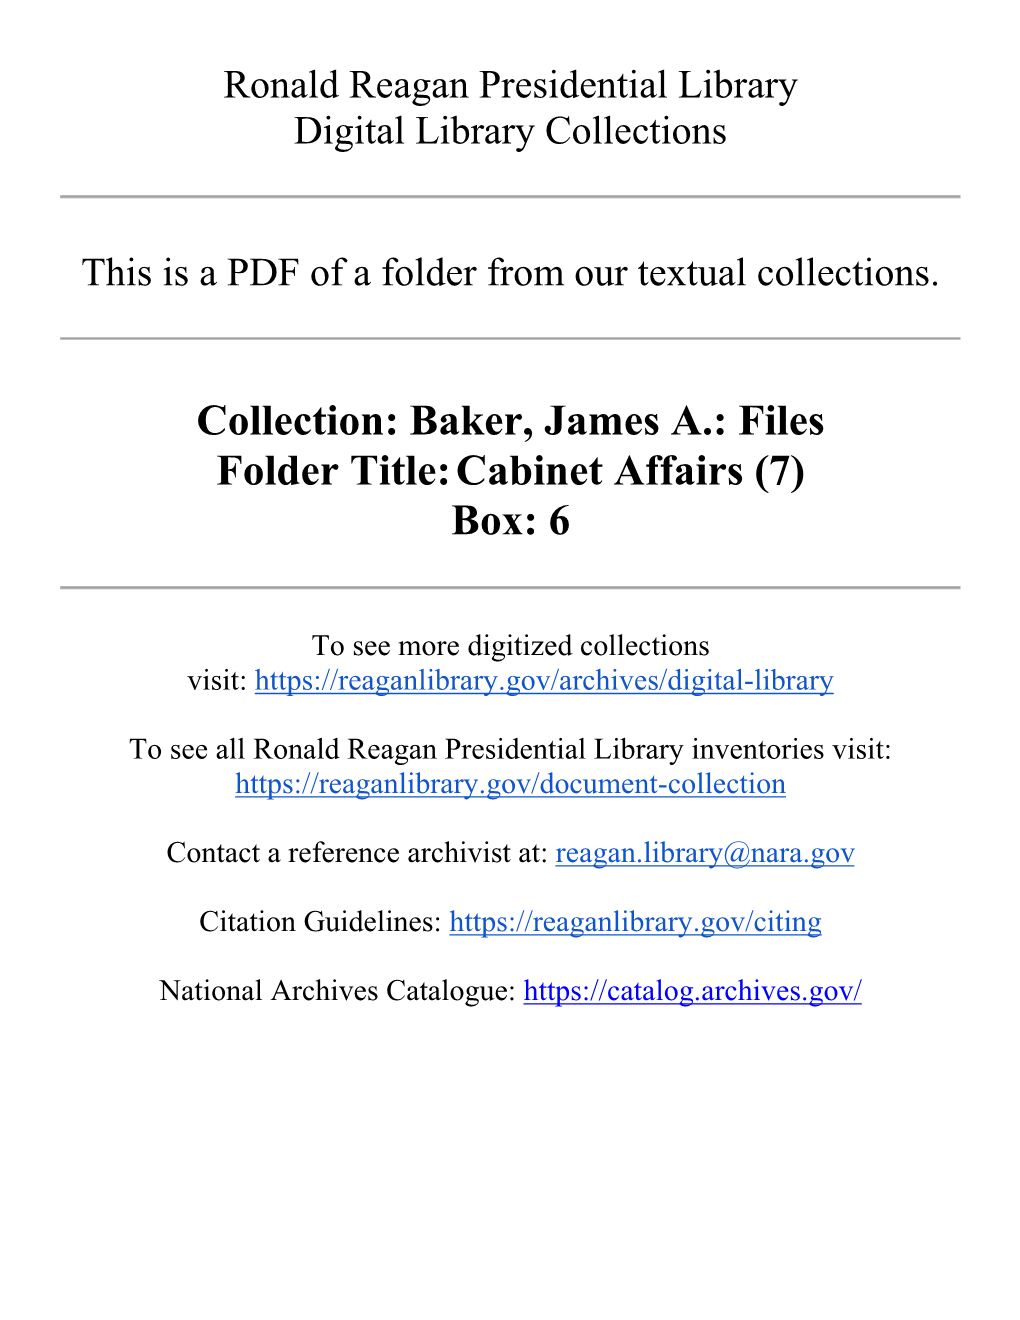 Baker, James A.: Files Folder Title: Cabinet Affairs (7) Box: 6